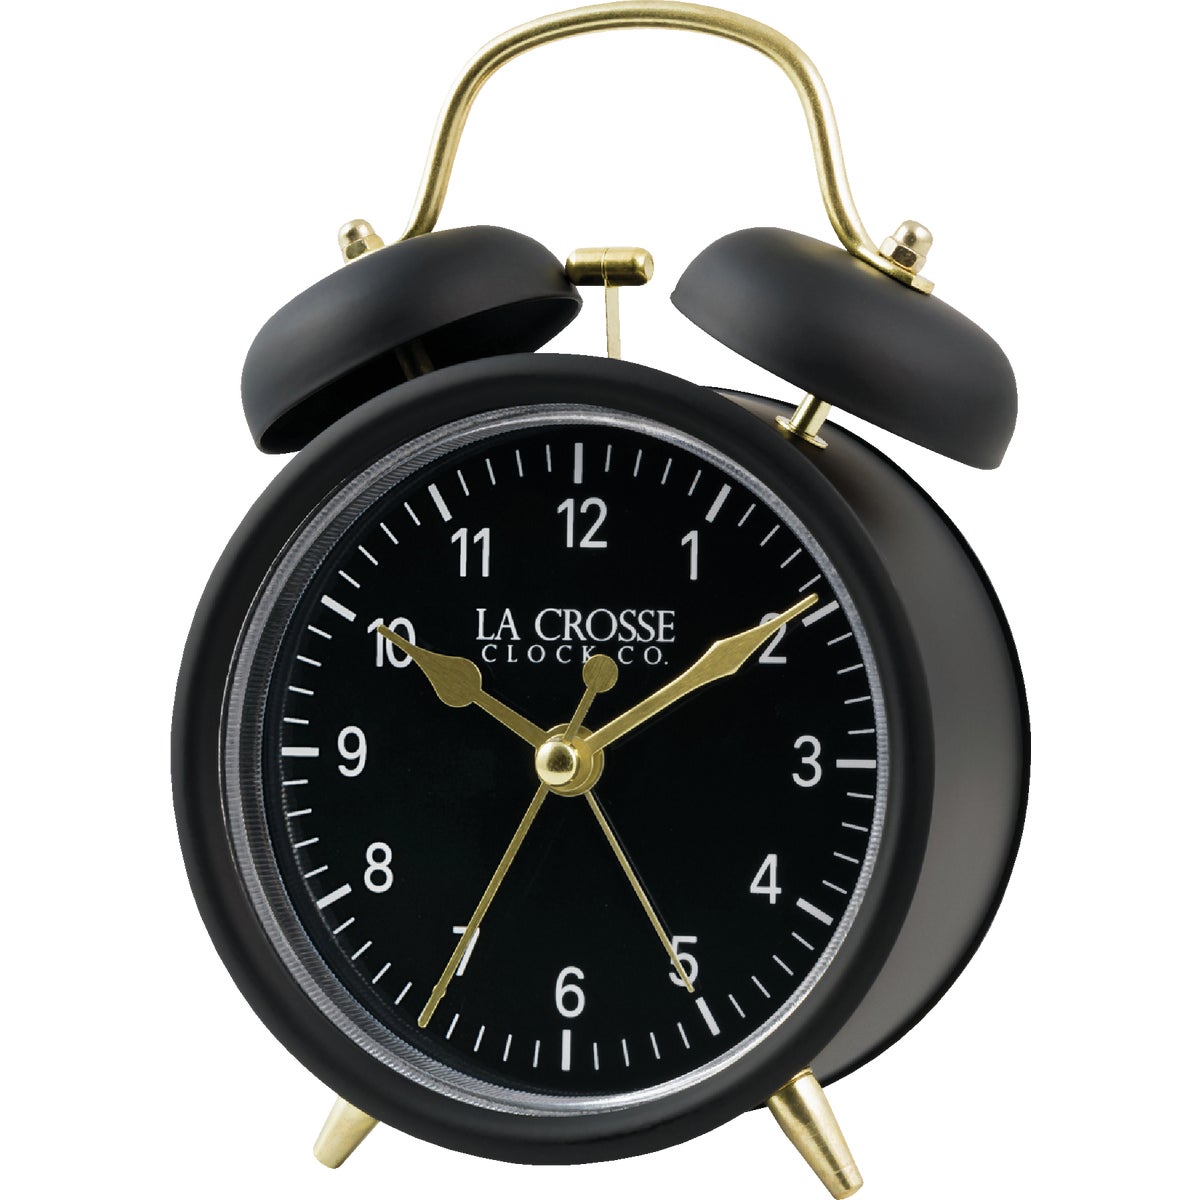 Item 663484, La Crosse Clock Co. Black Twin Bell Alarm Clock.